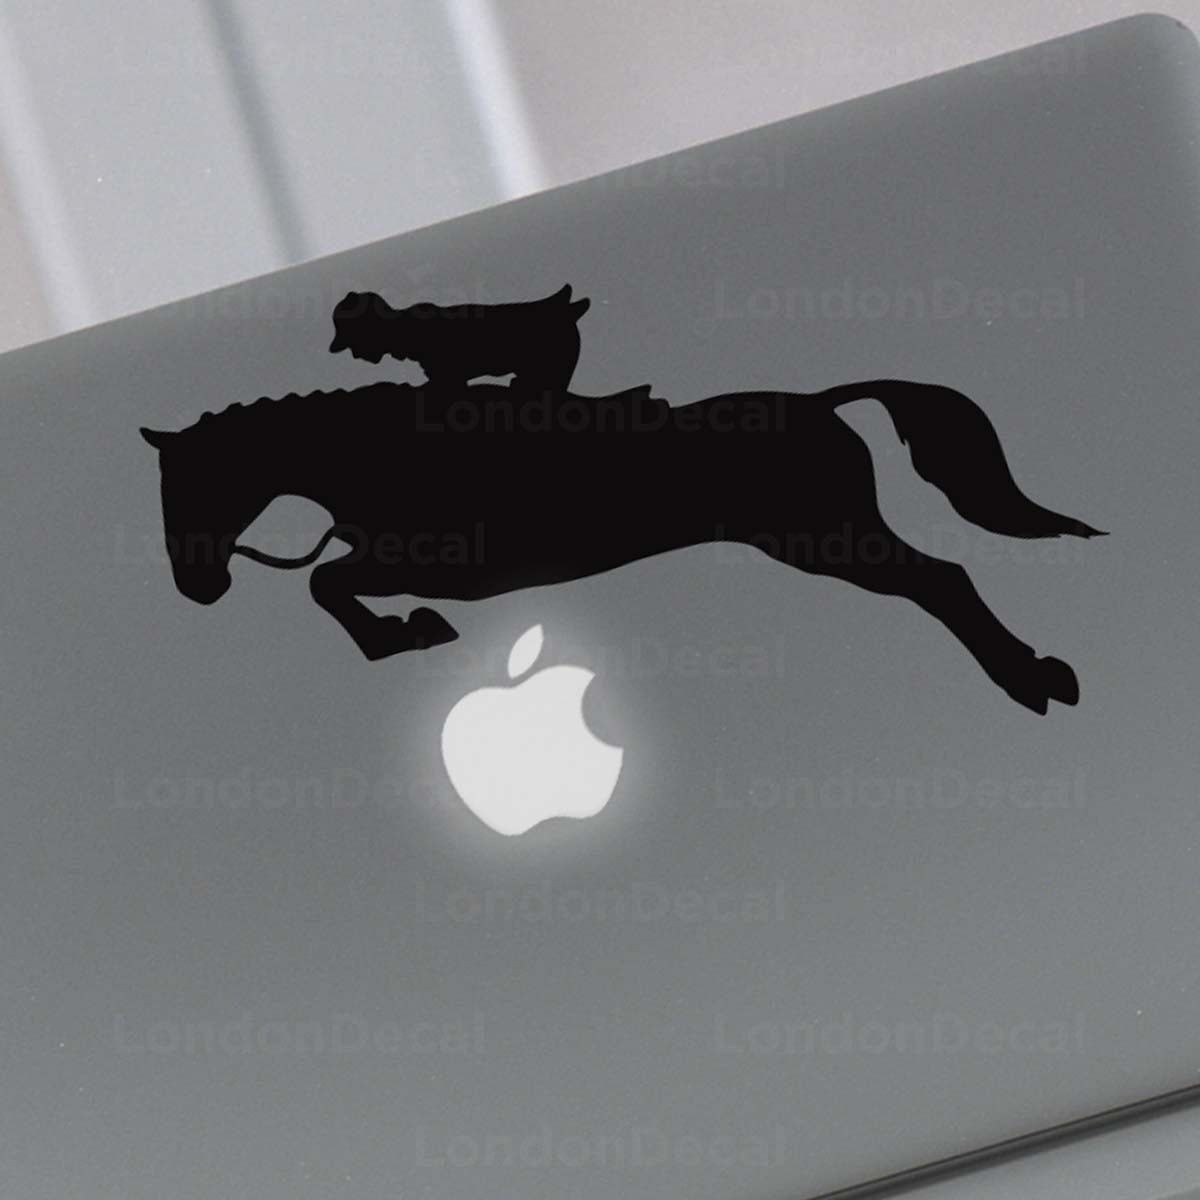 Horse Jumping Showjumper Macbook Decal